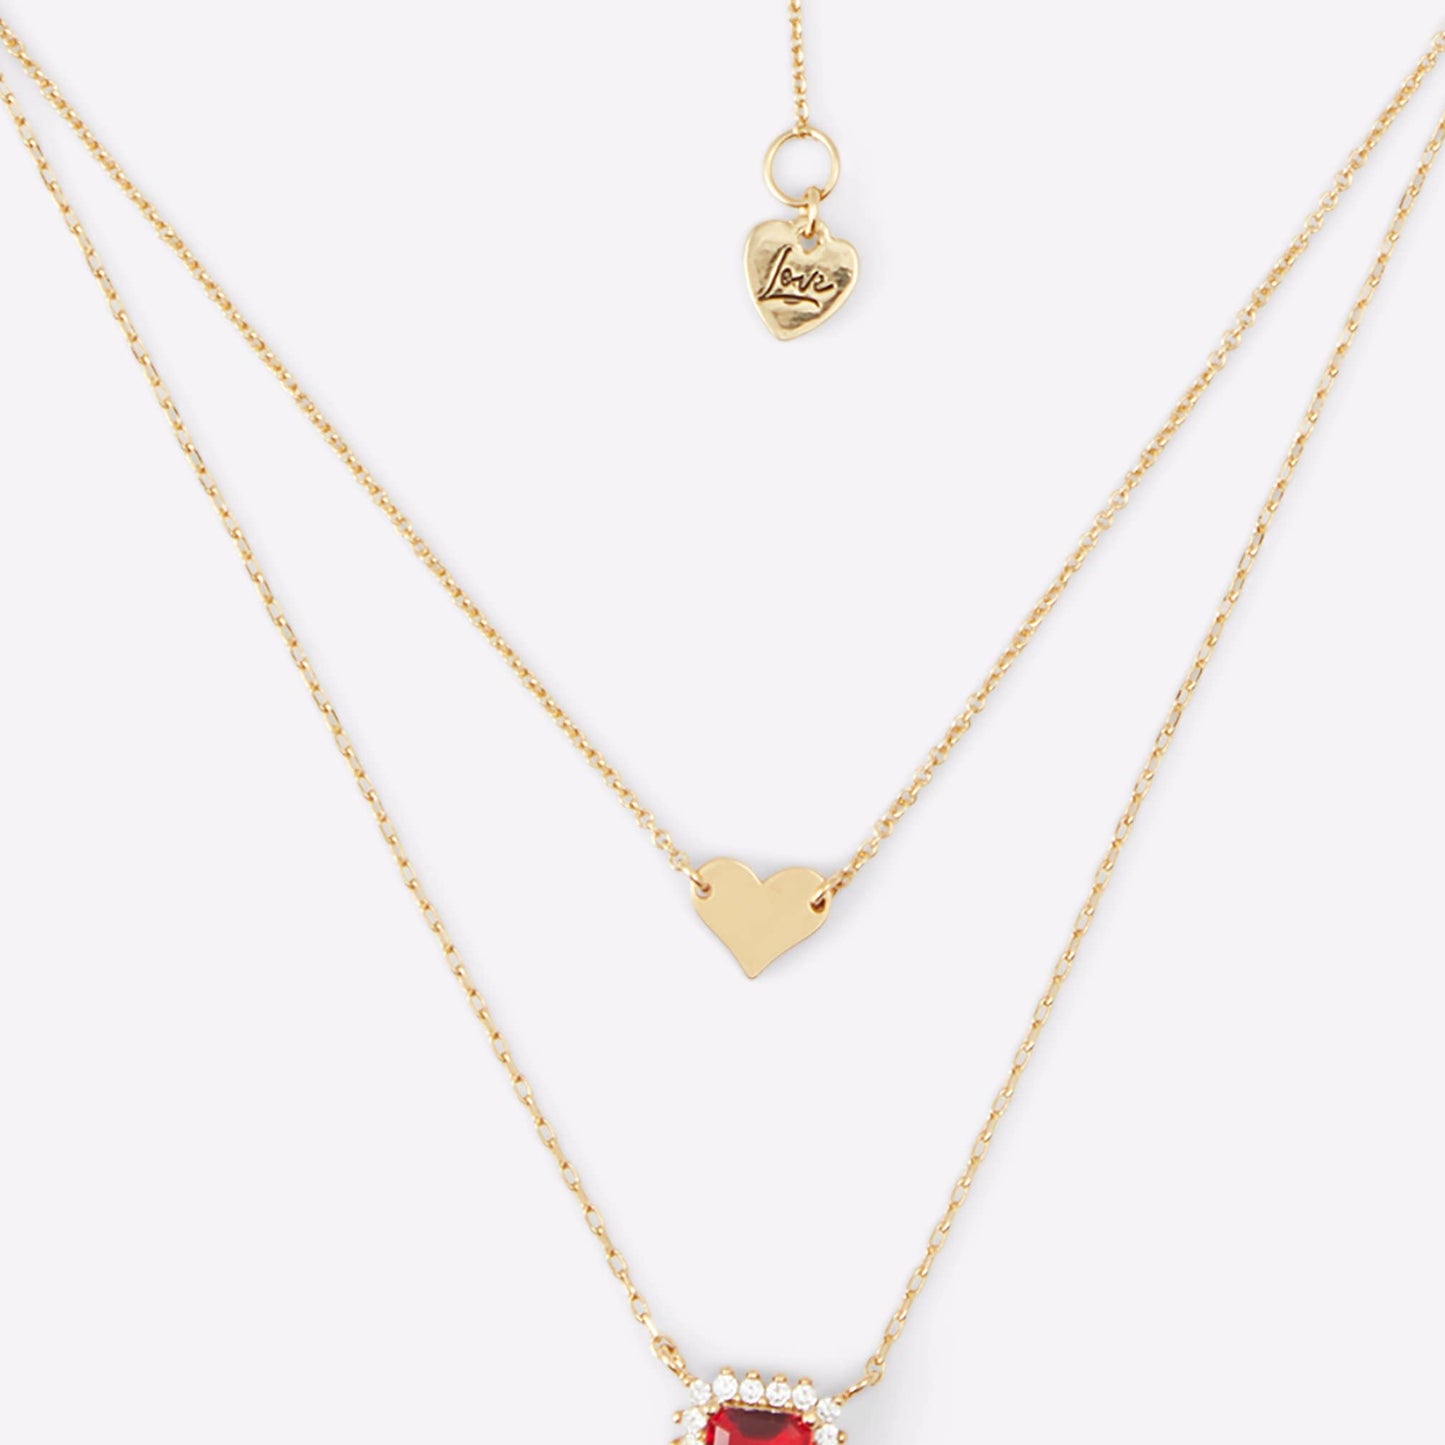 ALDO women necklace 23valaever, red, 23valaever-600, valaever, standard